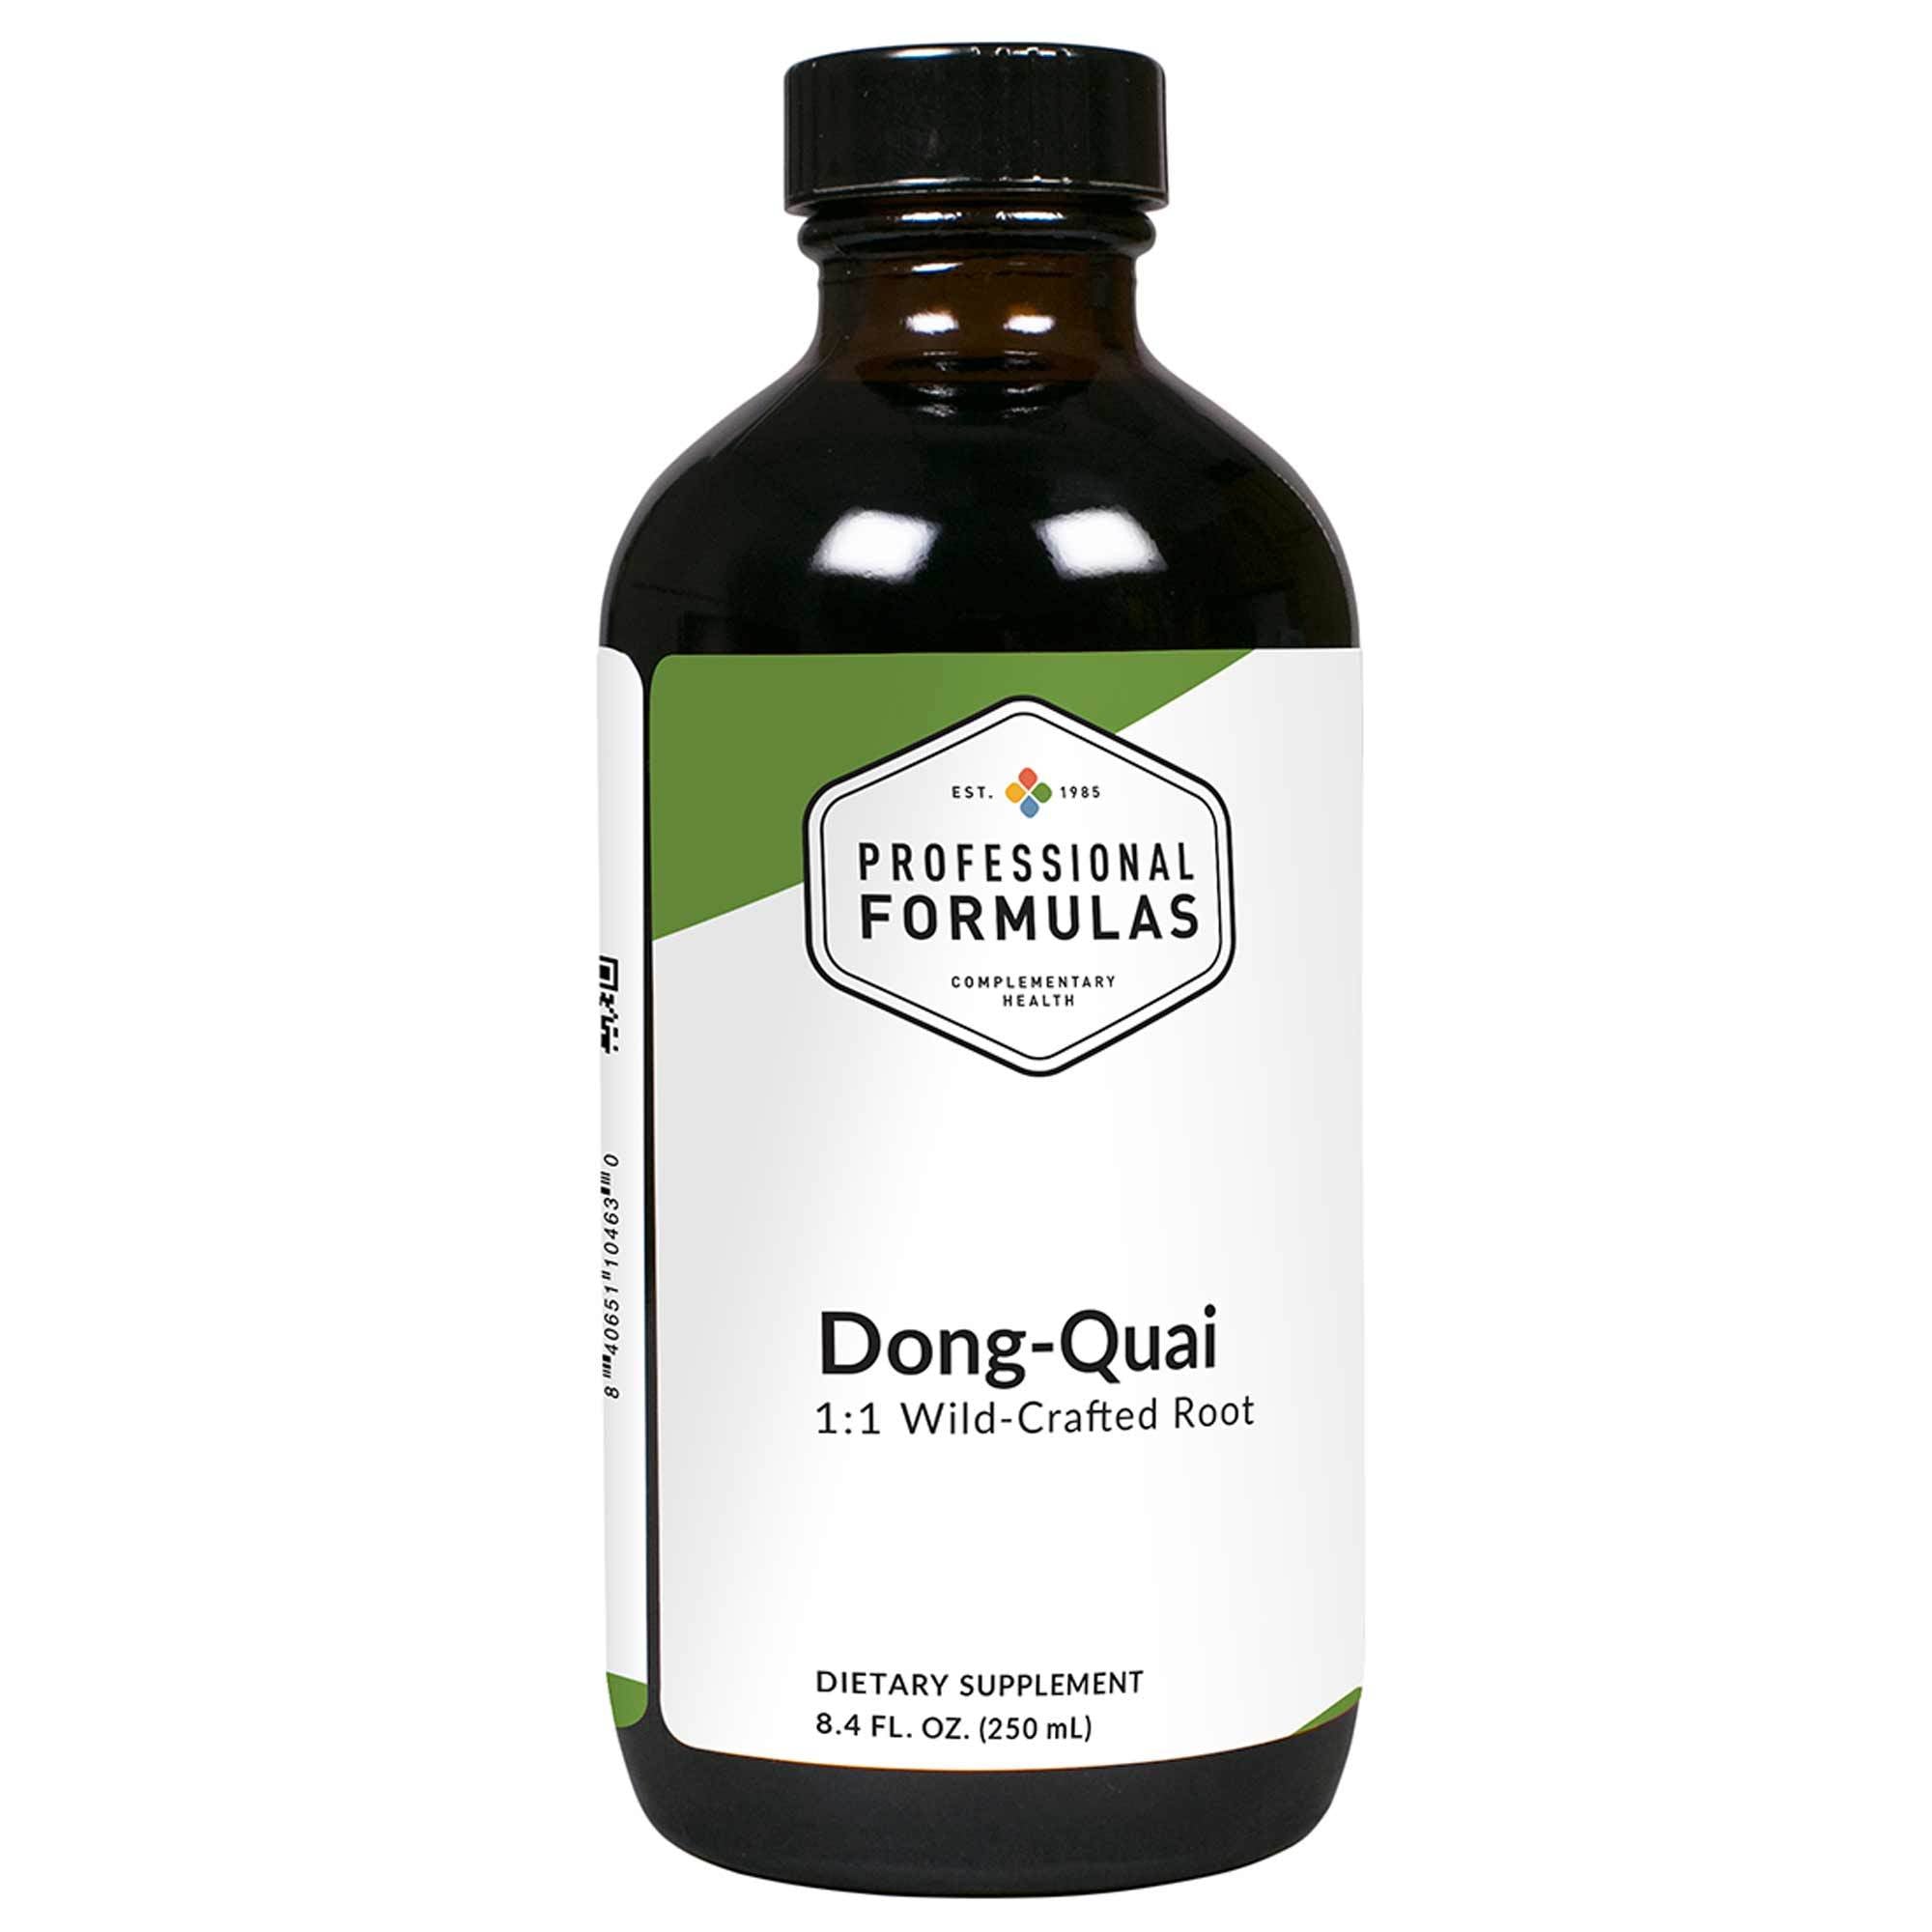 Professional Formulas - Dong-Quai (Angelica sinensis) - 8.4 FL. OZ. (250 mL)